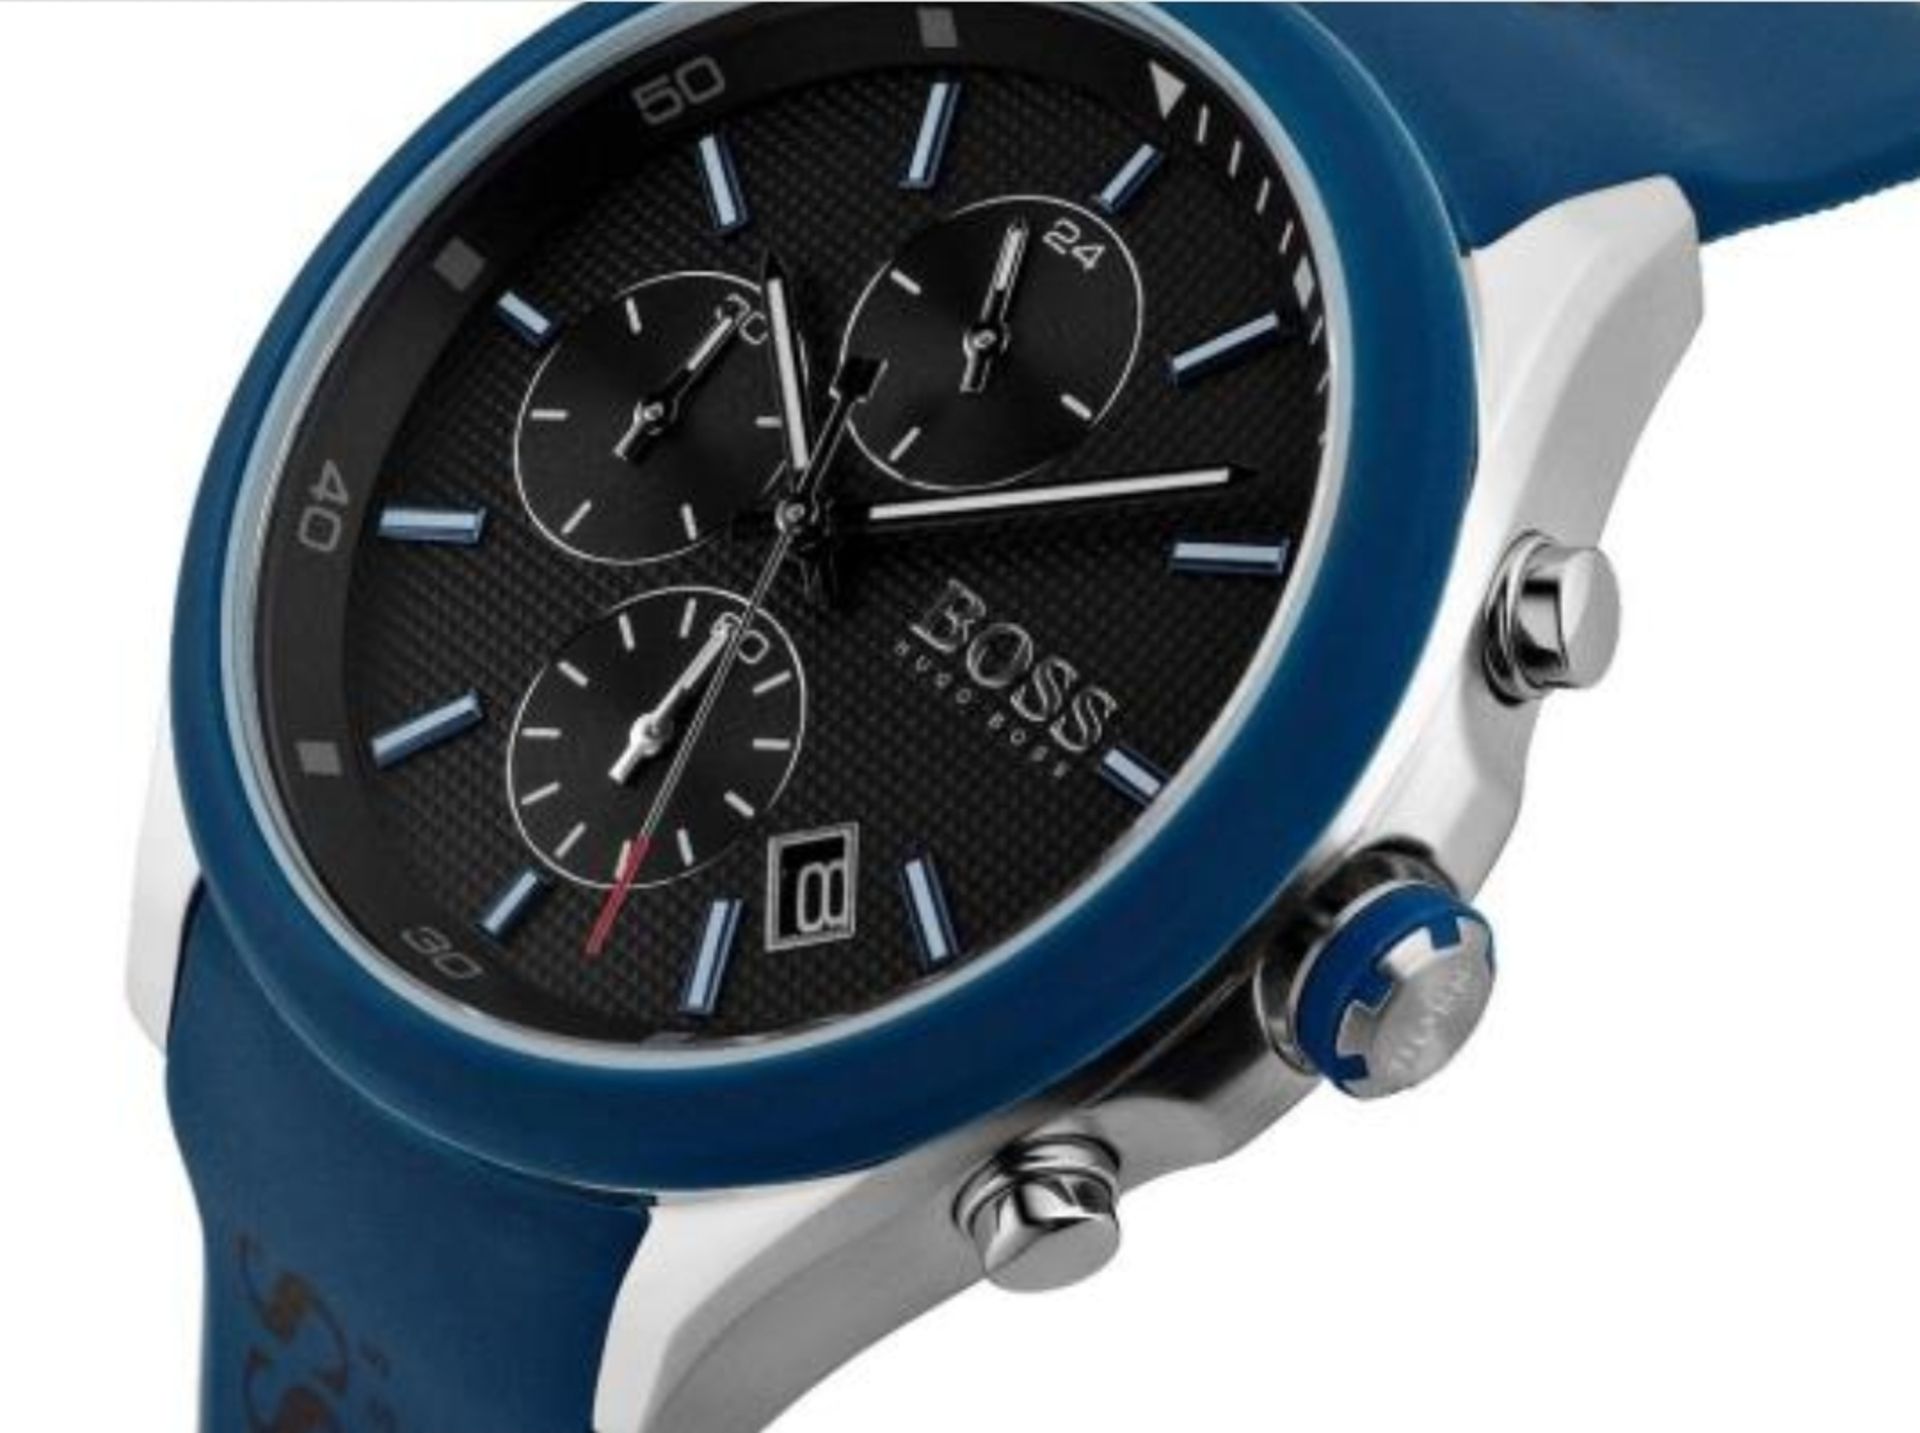 Hugo Boss 1513717 Men's Velocity Blue Rubber Strap Quartz Chronograph Watch - Image 6 of 11